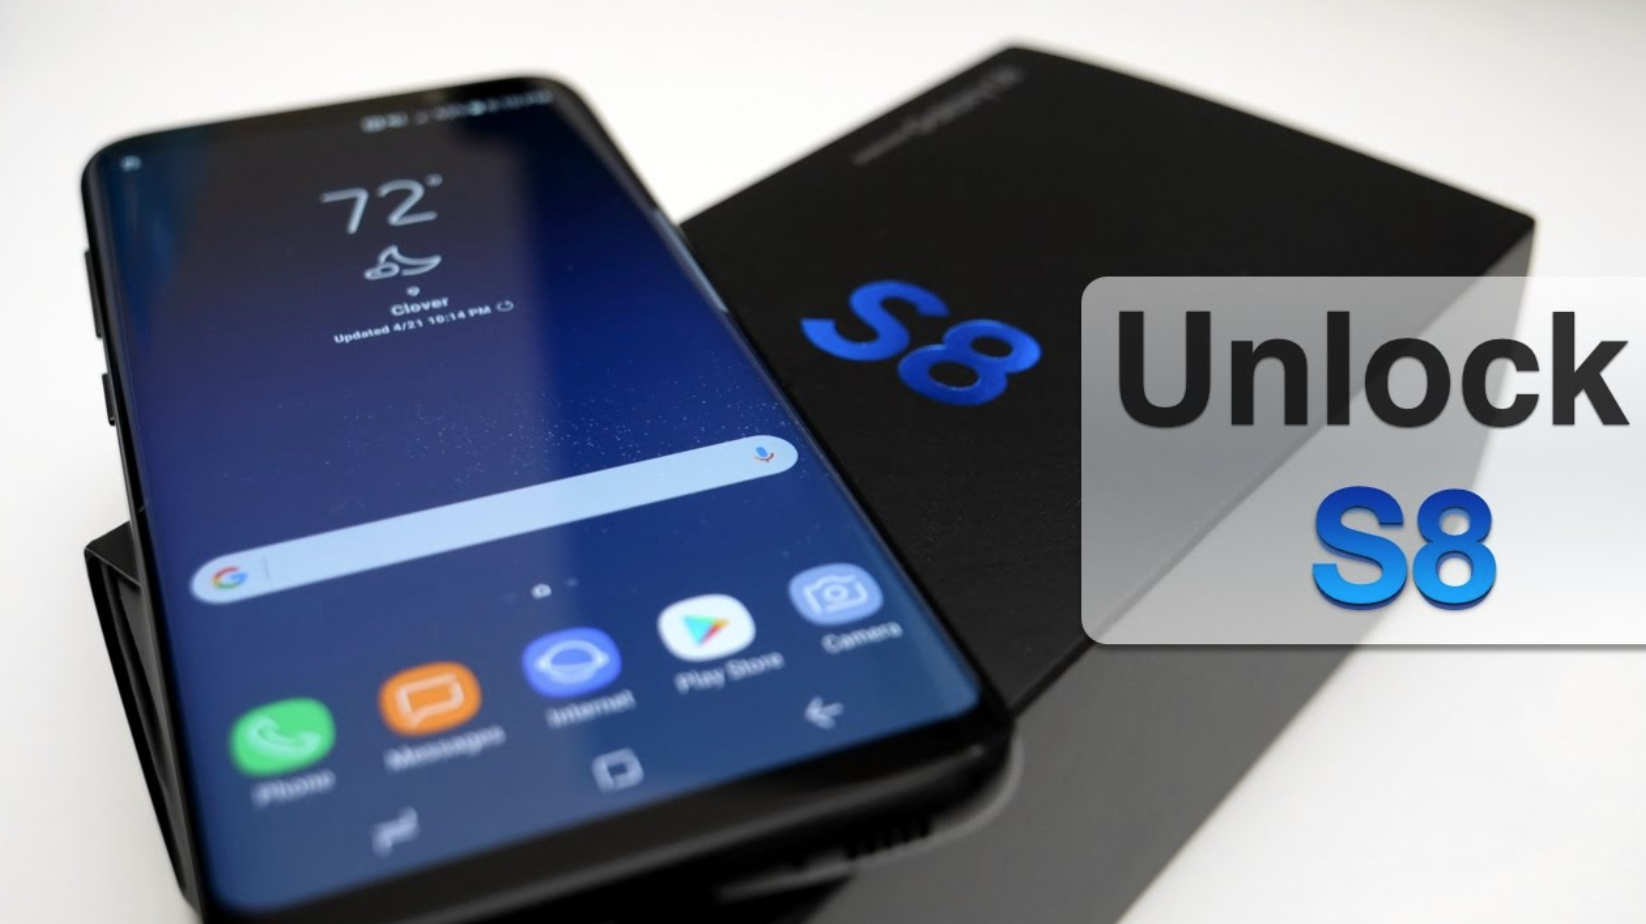 Unlock Samsung Galaxy S8 Code Generator